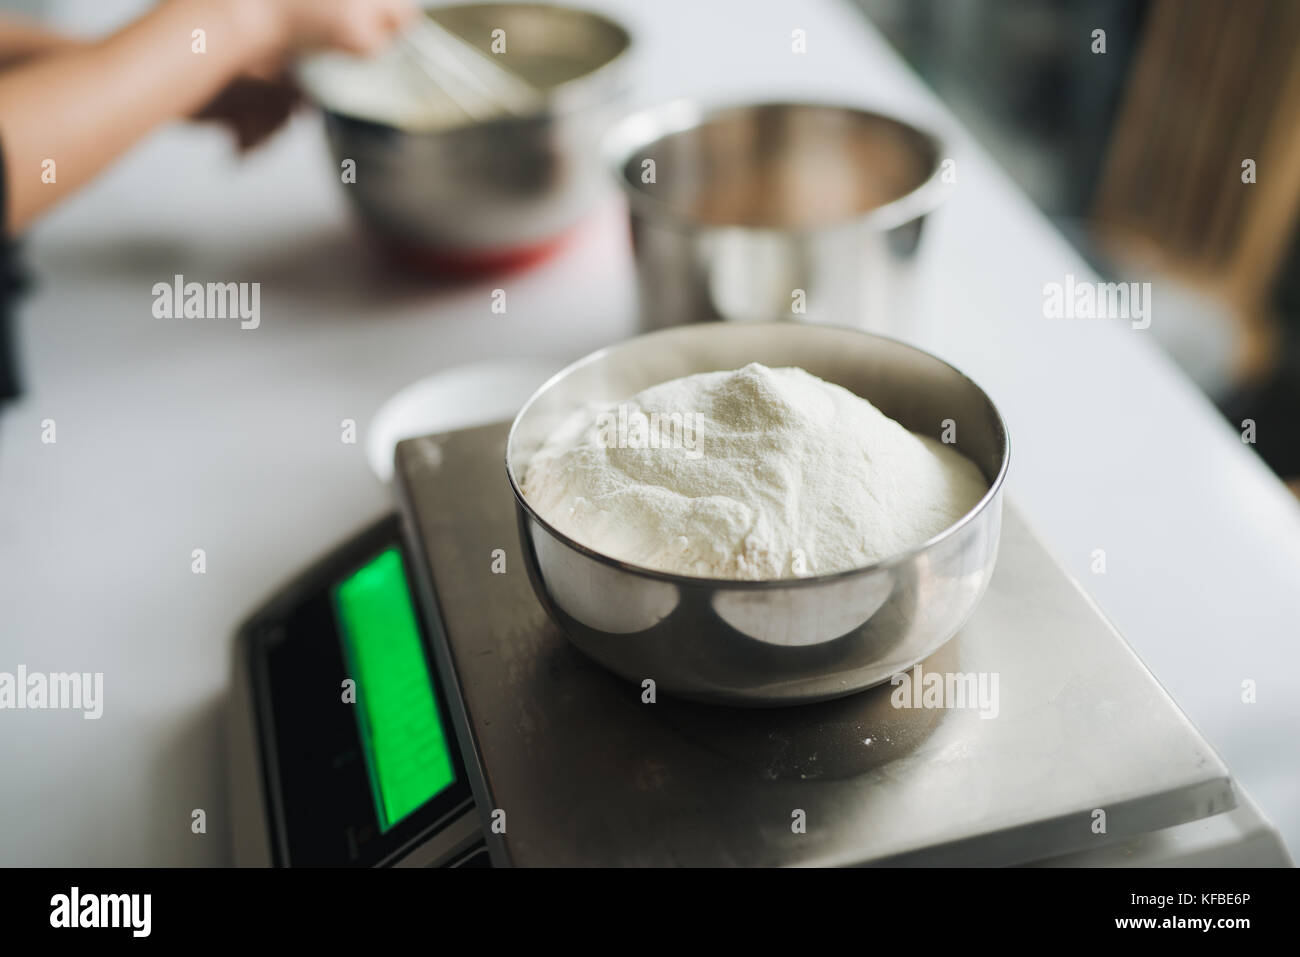 https://c8.alamy.com/comp/KFBE6P/bakery-chef-weighing-flour-on-the-digital-scale-KFBE6P.jpg